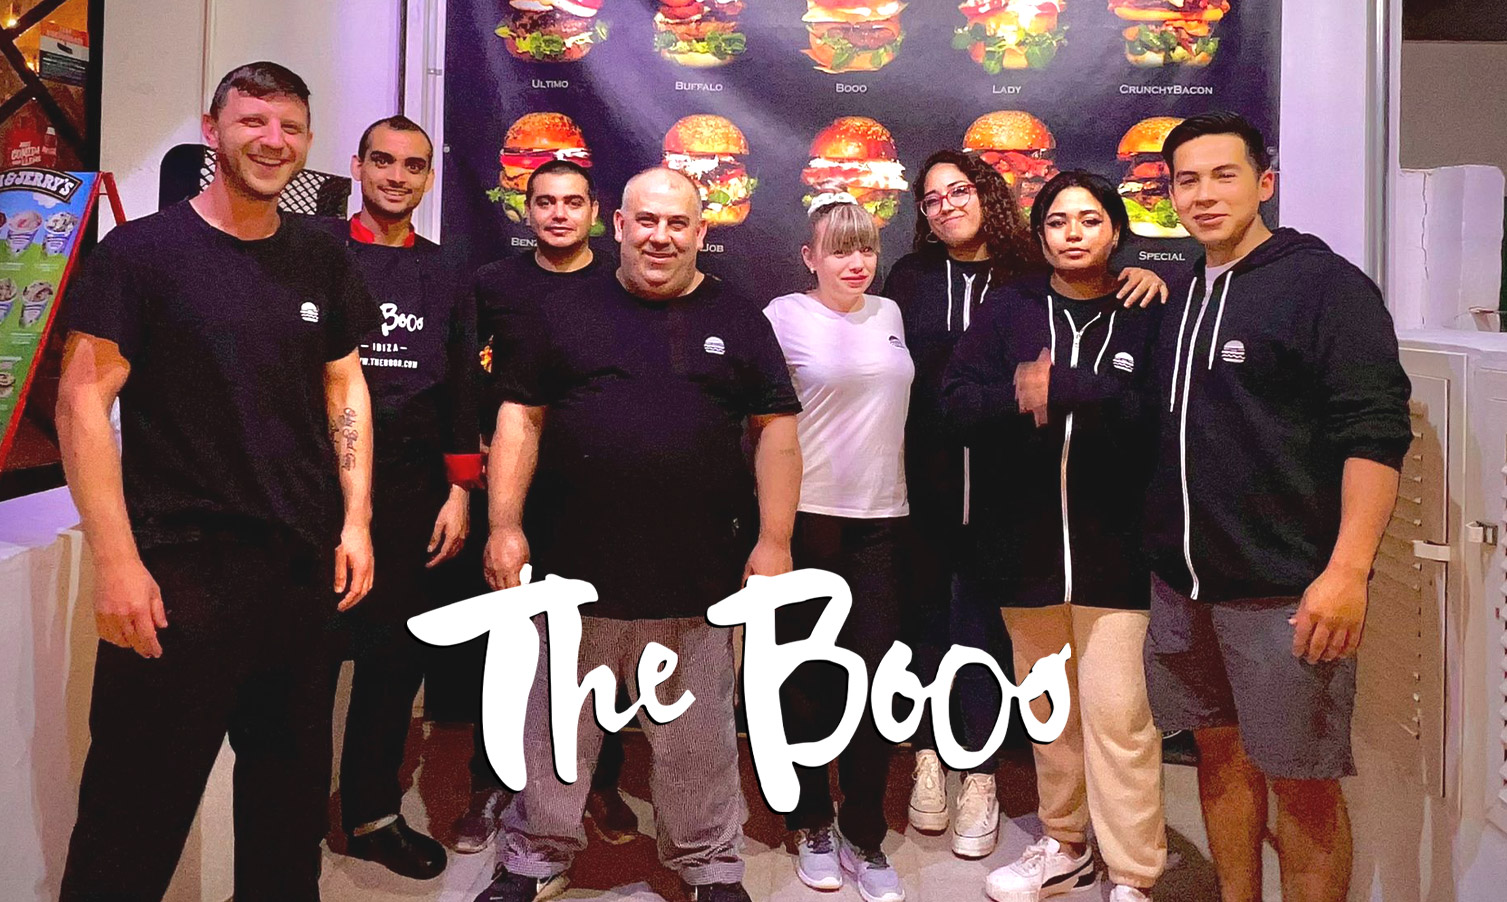 The Booo Restaurant Team